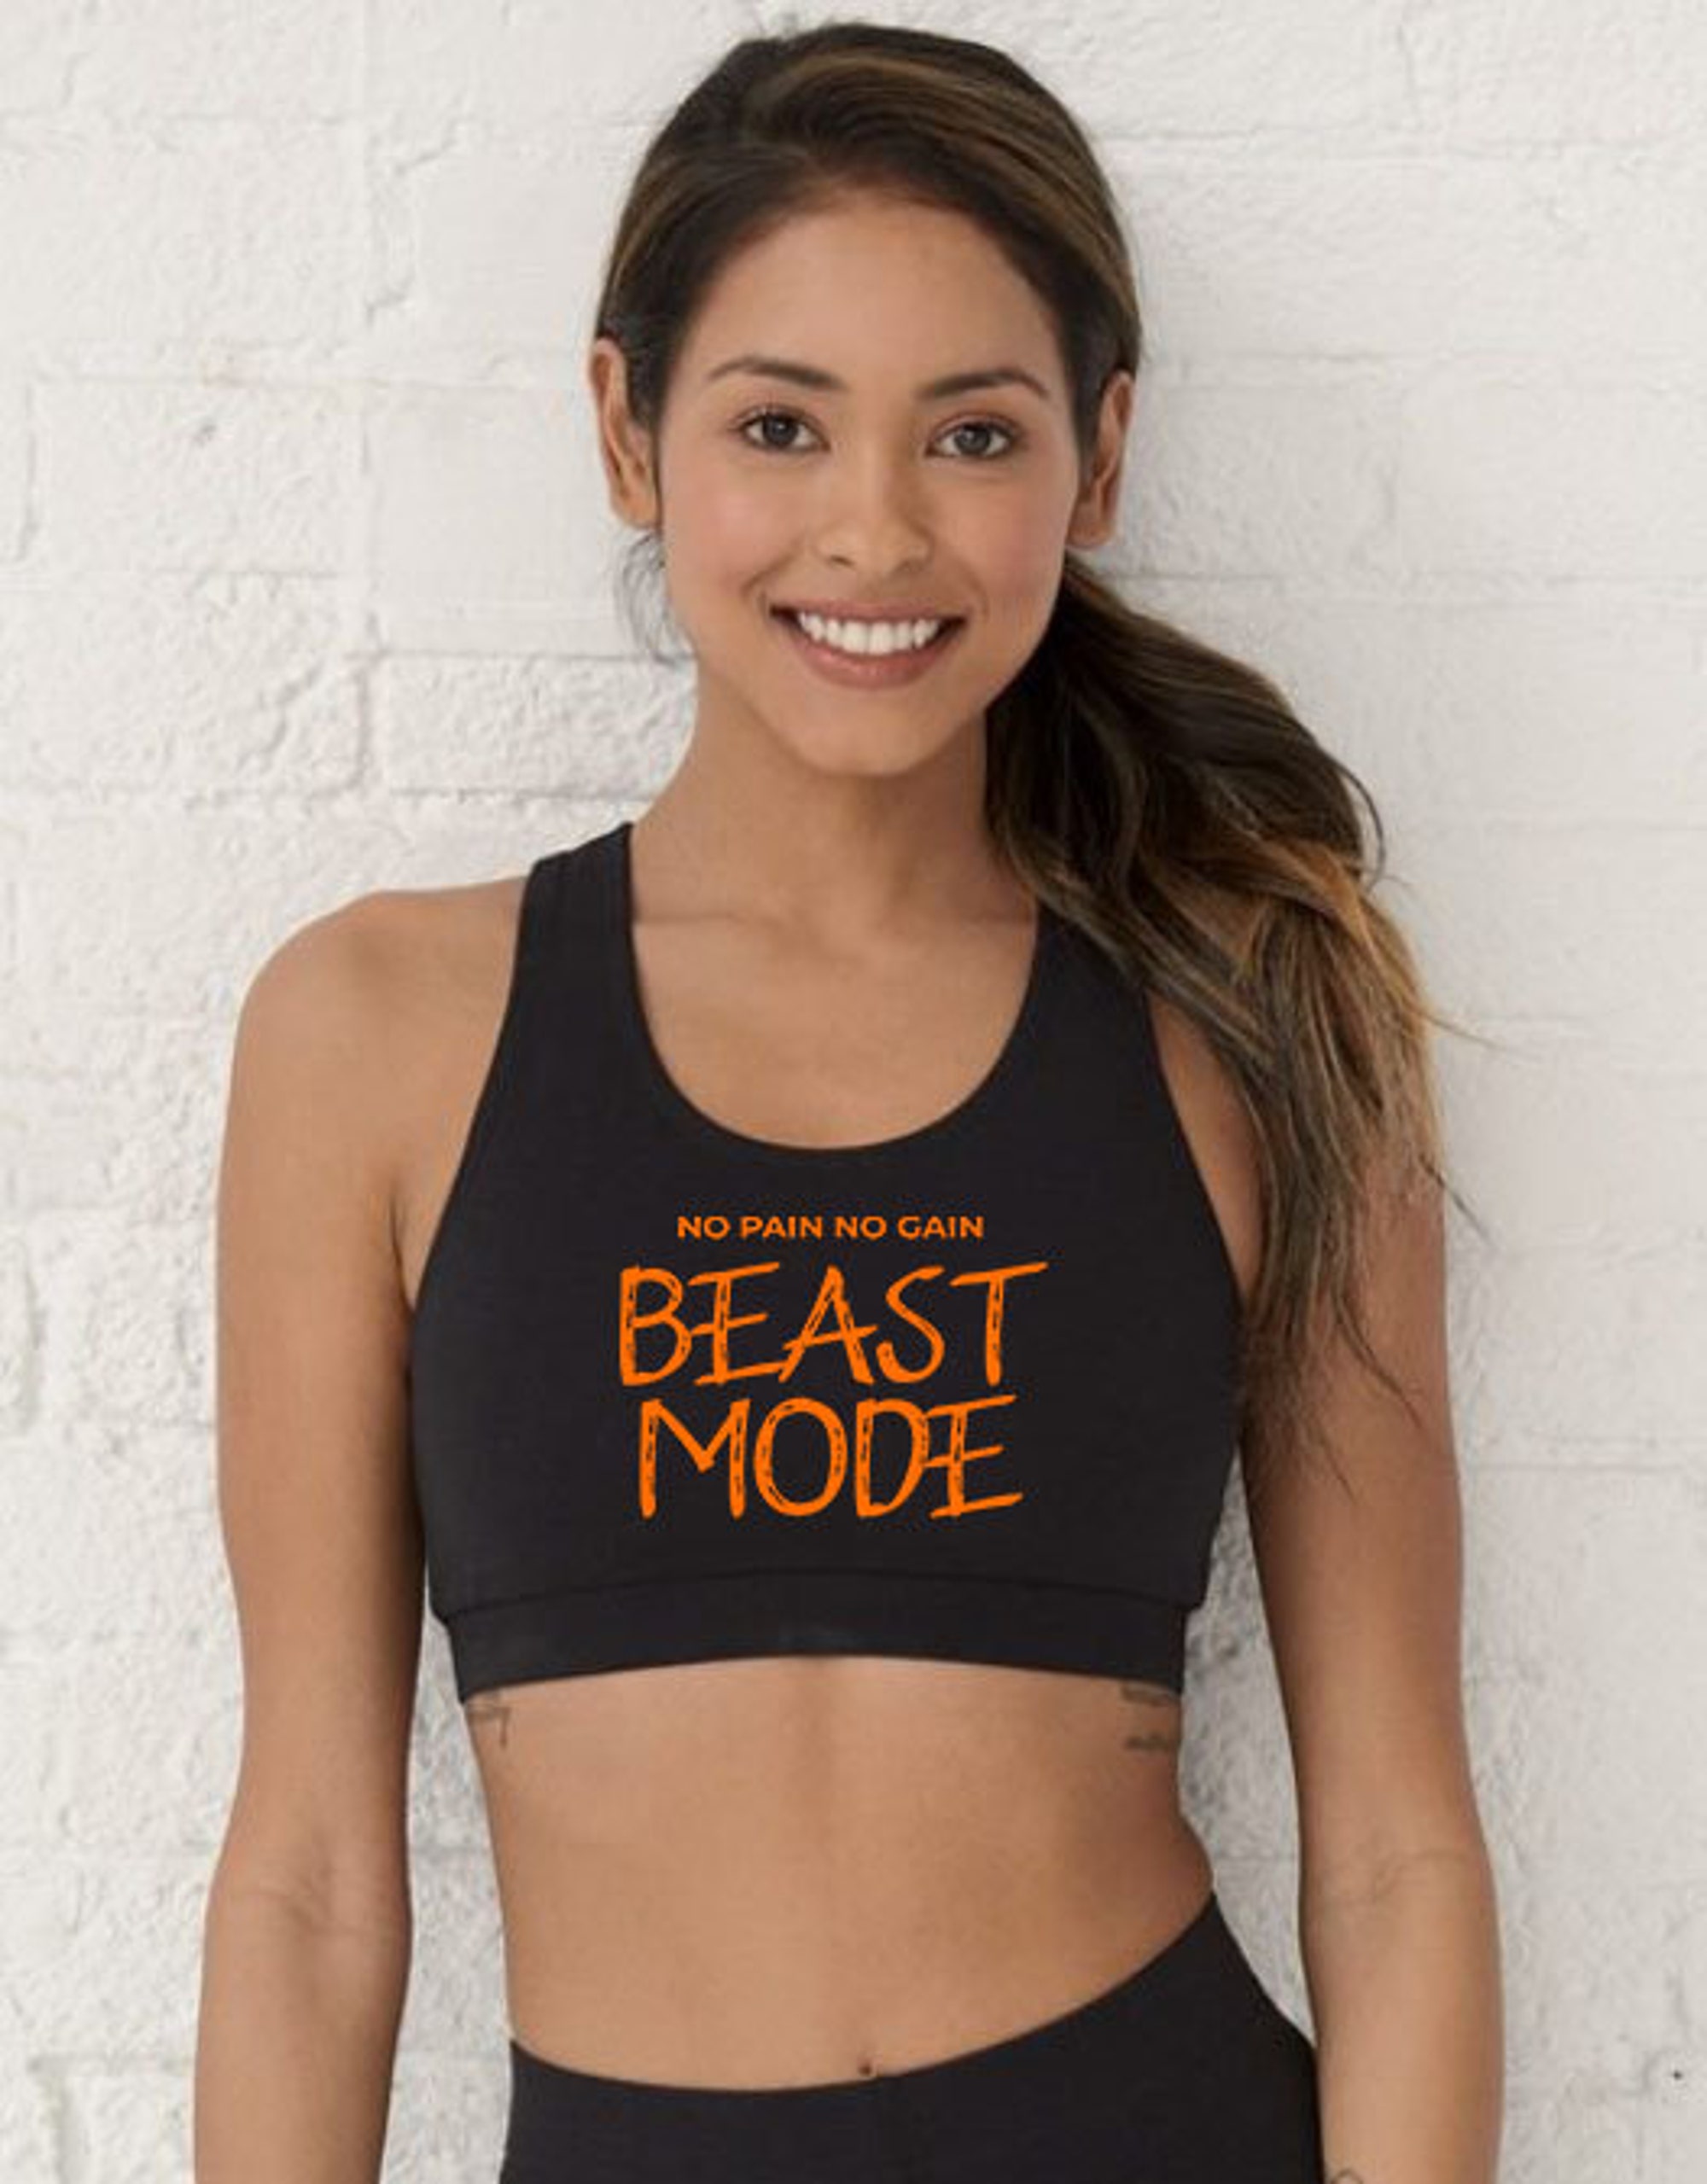 Beast Mode sports bra - Lifting bra- Body bulding Apparel - Workout Outfit Sport bra